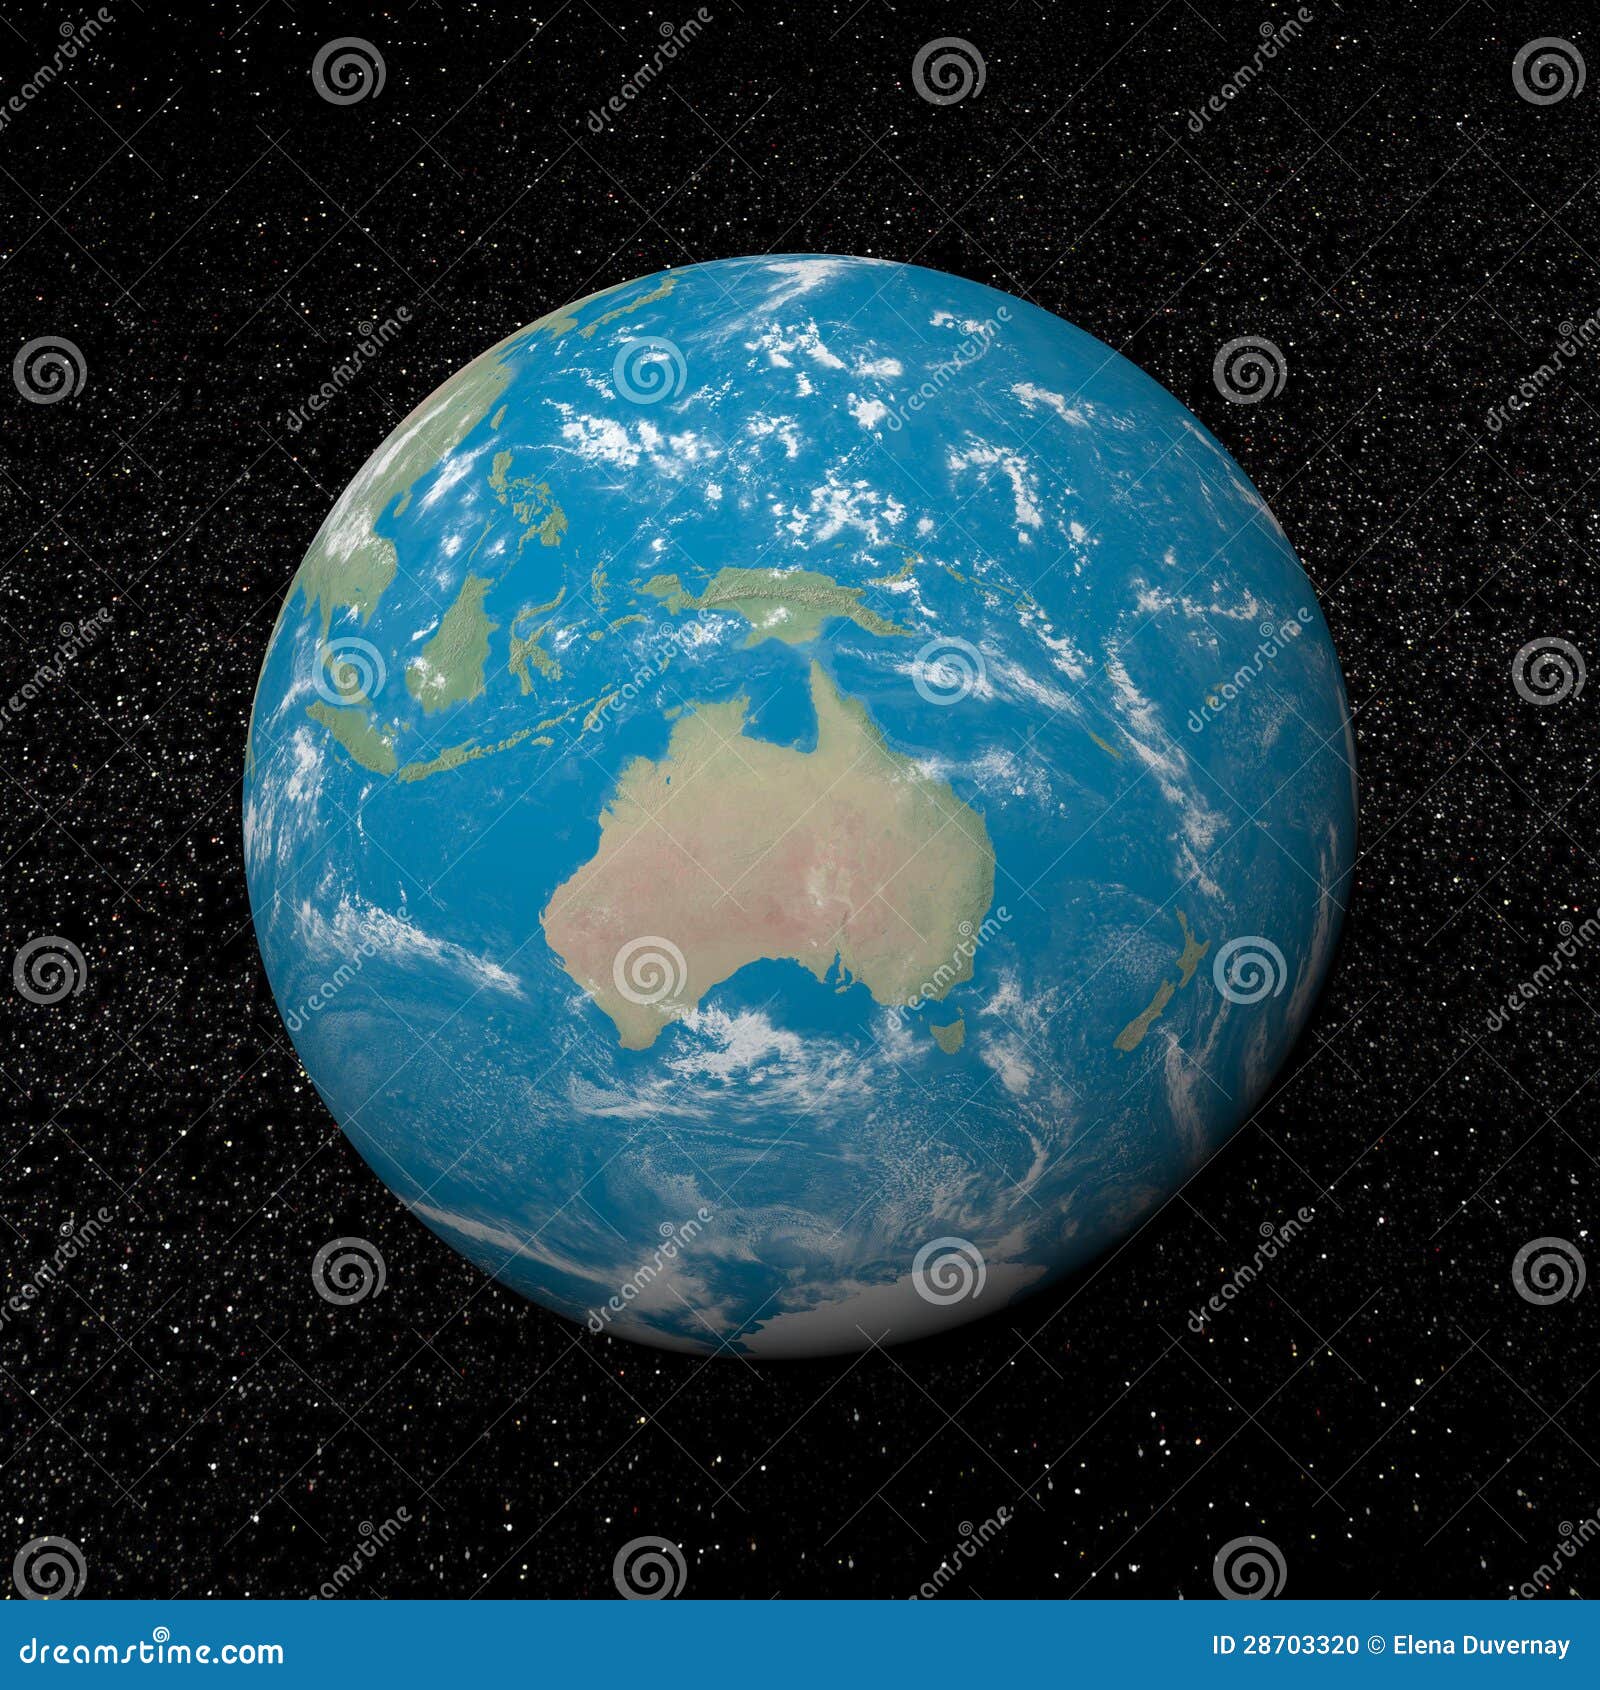 oceania on earth - 3d render